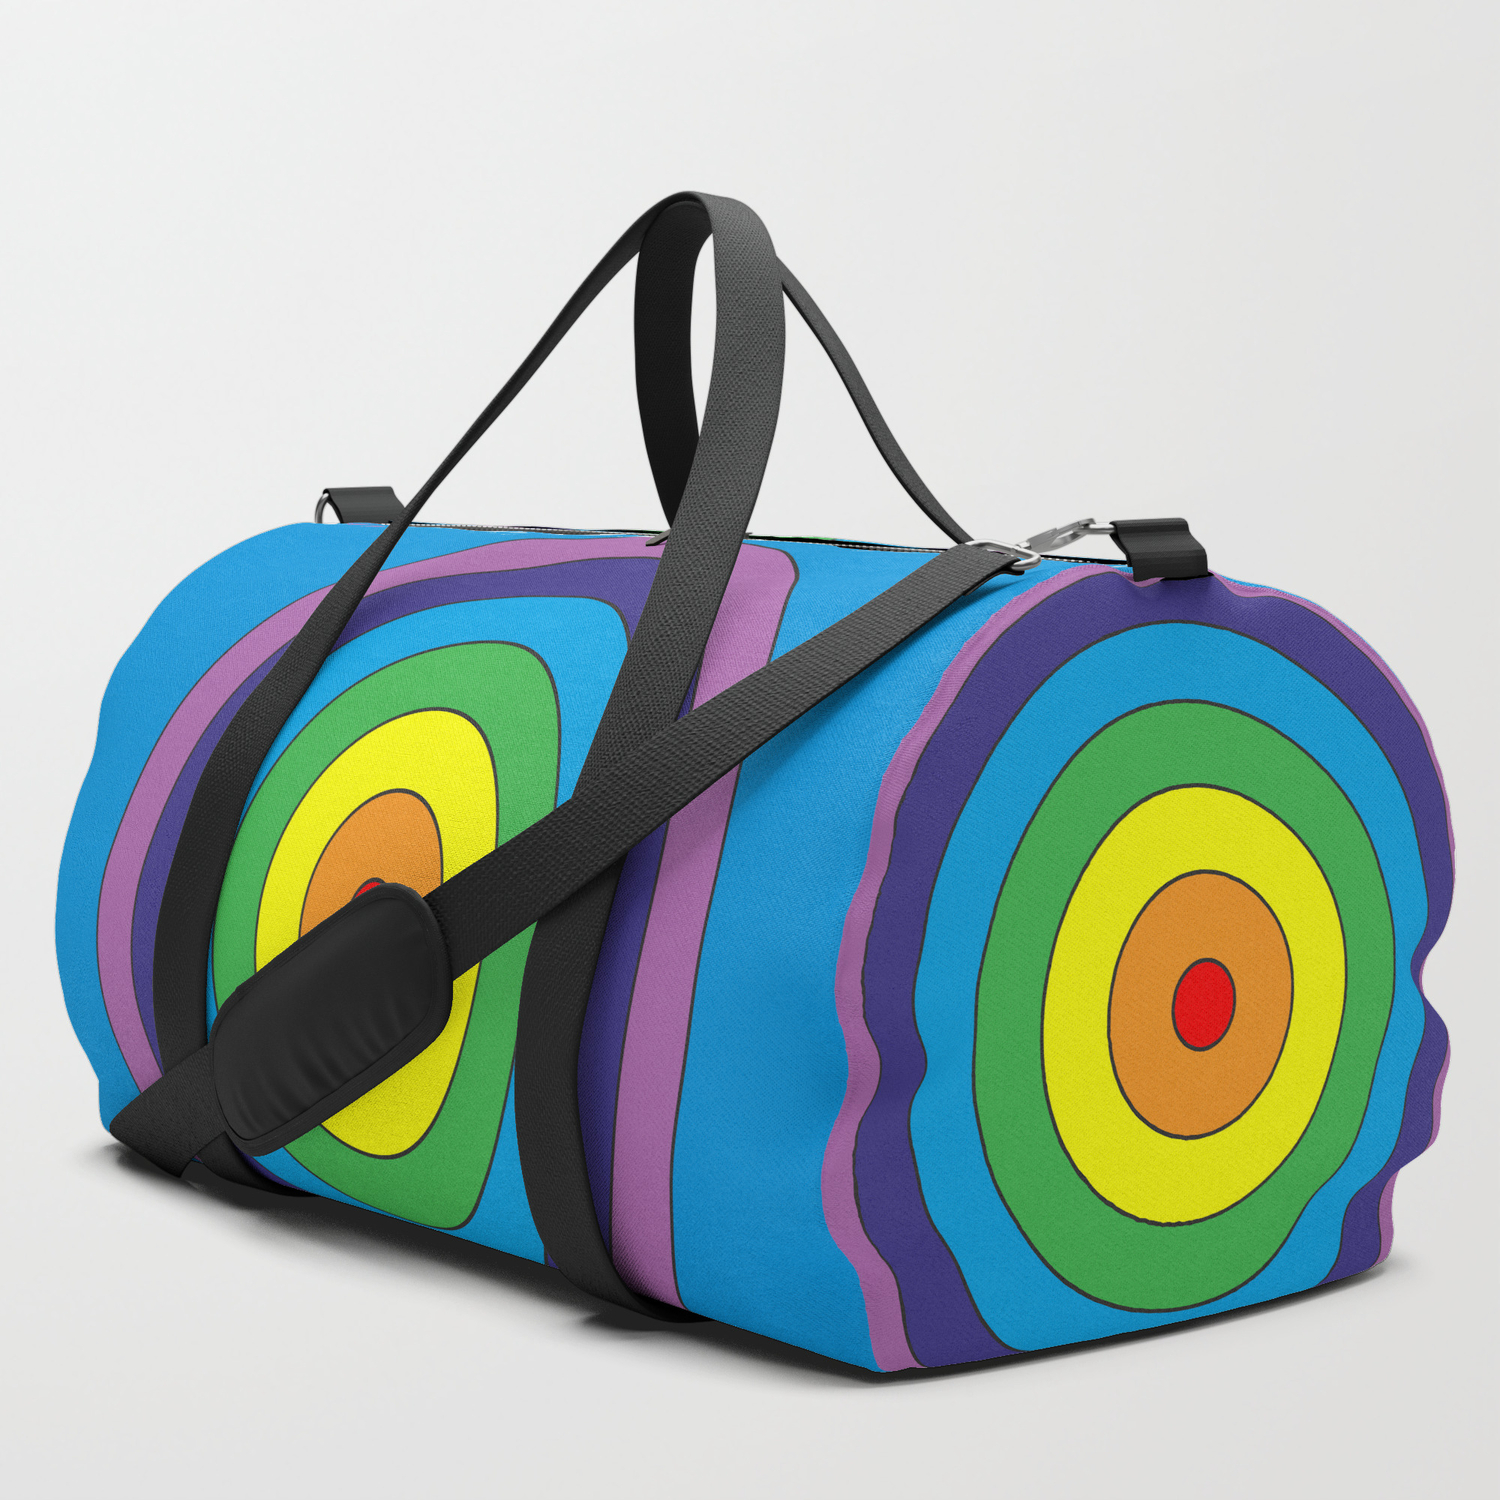 Duffle Bag With Wheels Target | Bruin Blog